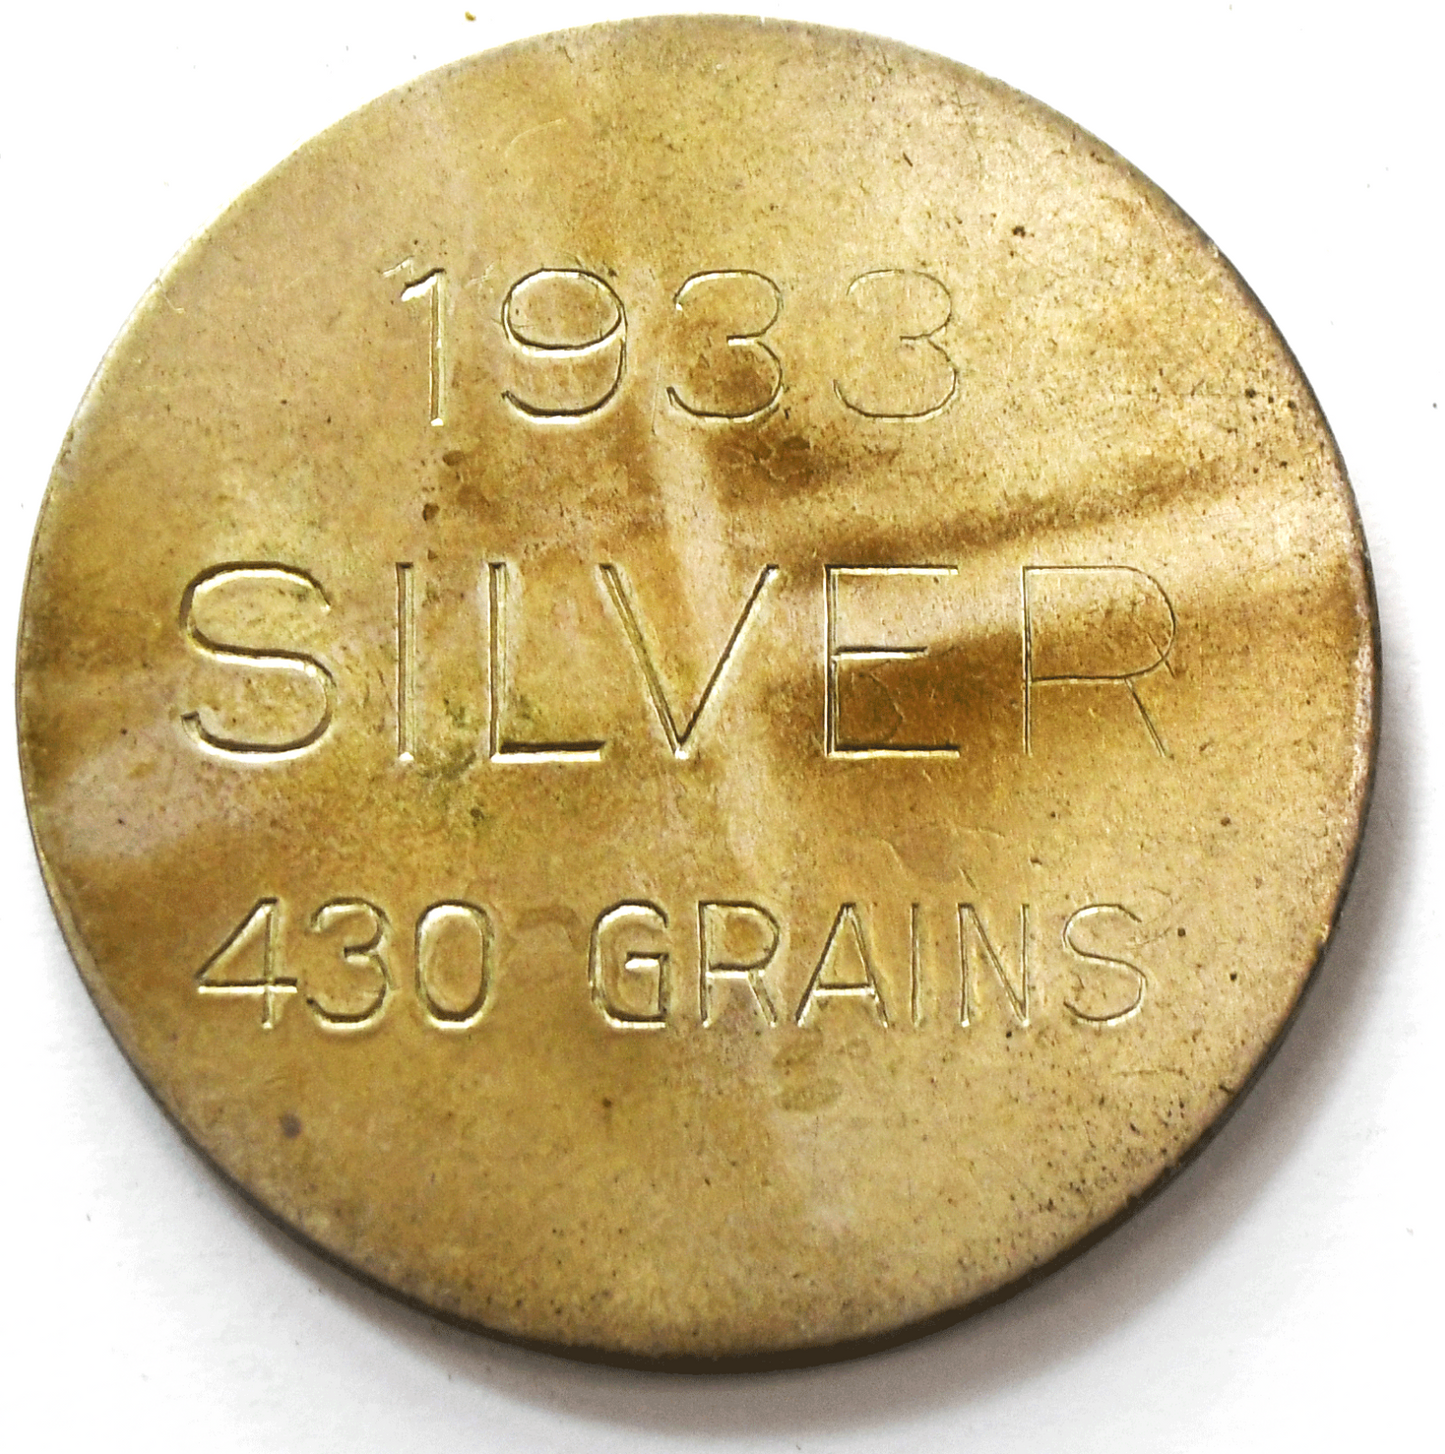 1933 Pedley-Ryan Co Denver HK-825 So Called Dollar 430 Grains Silver 500 Minted